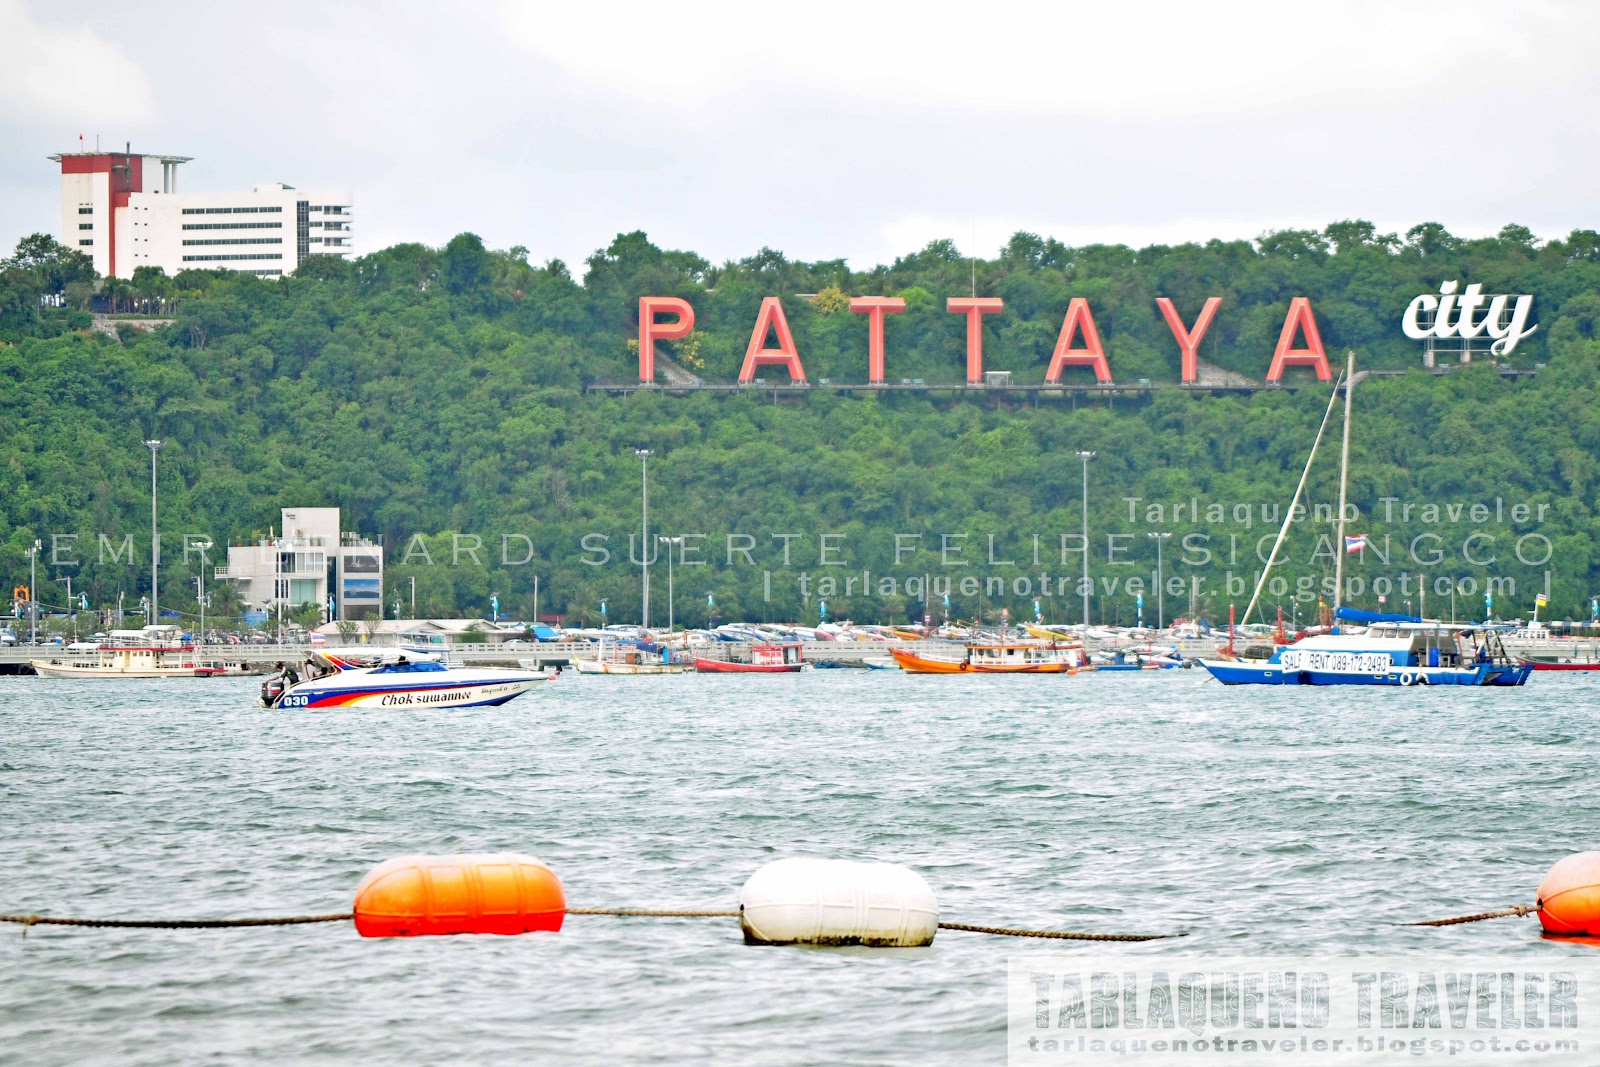 Nice Images Collection: Pattaya City Desktop Wallpapers